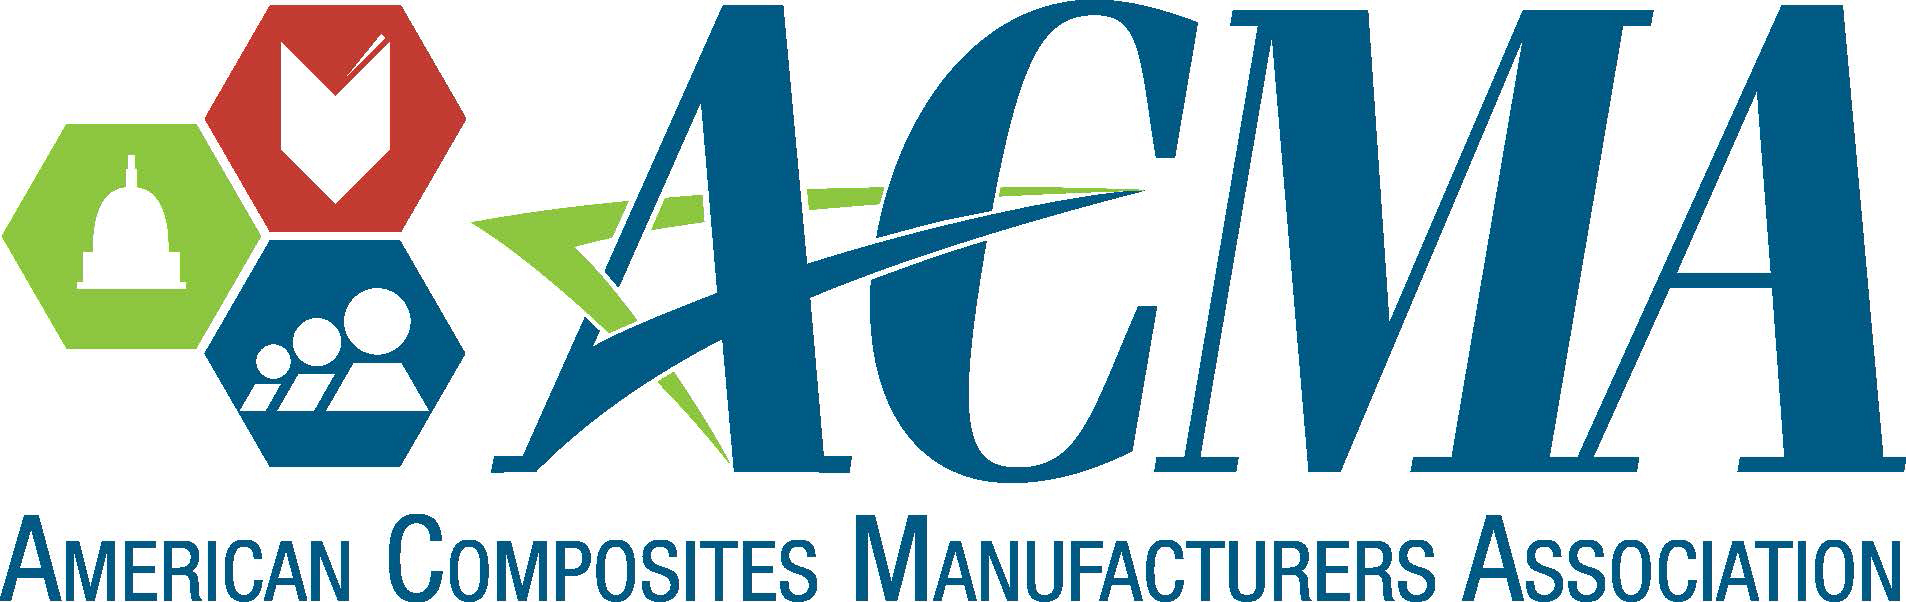 AltraSet | American Composites Manufacturing Association Logo | ACMA Logo